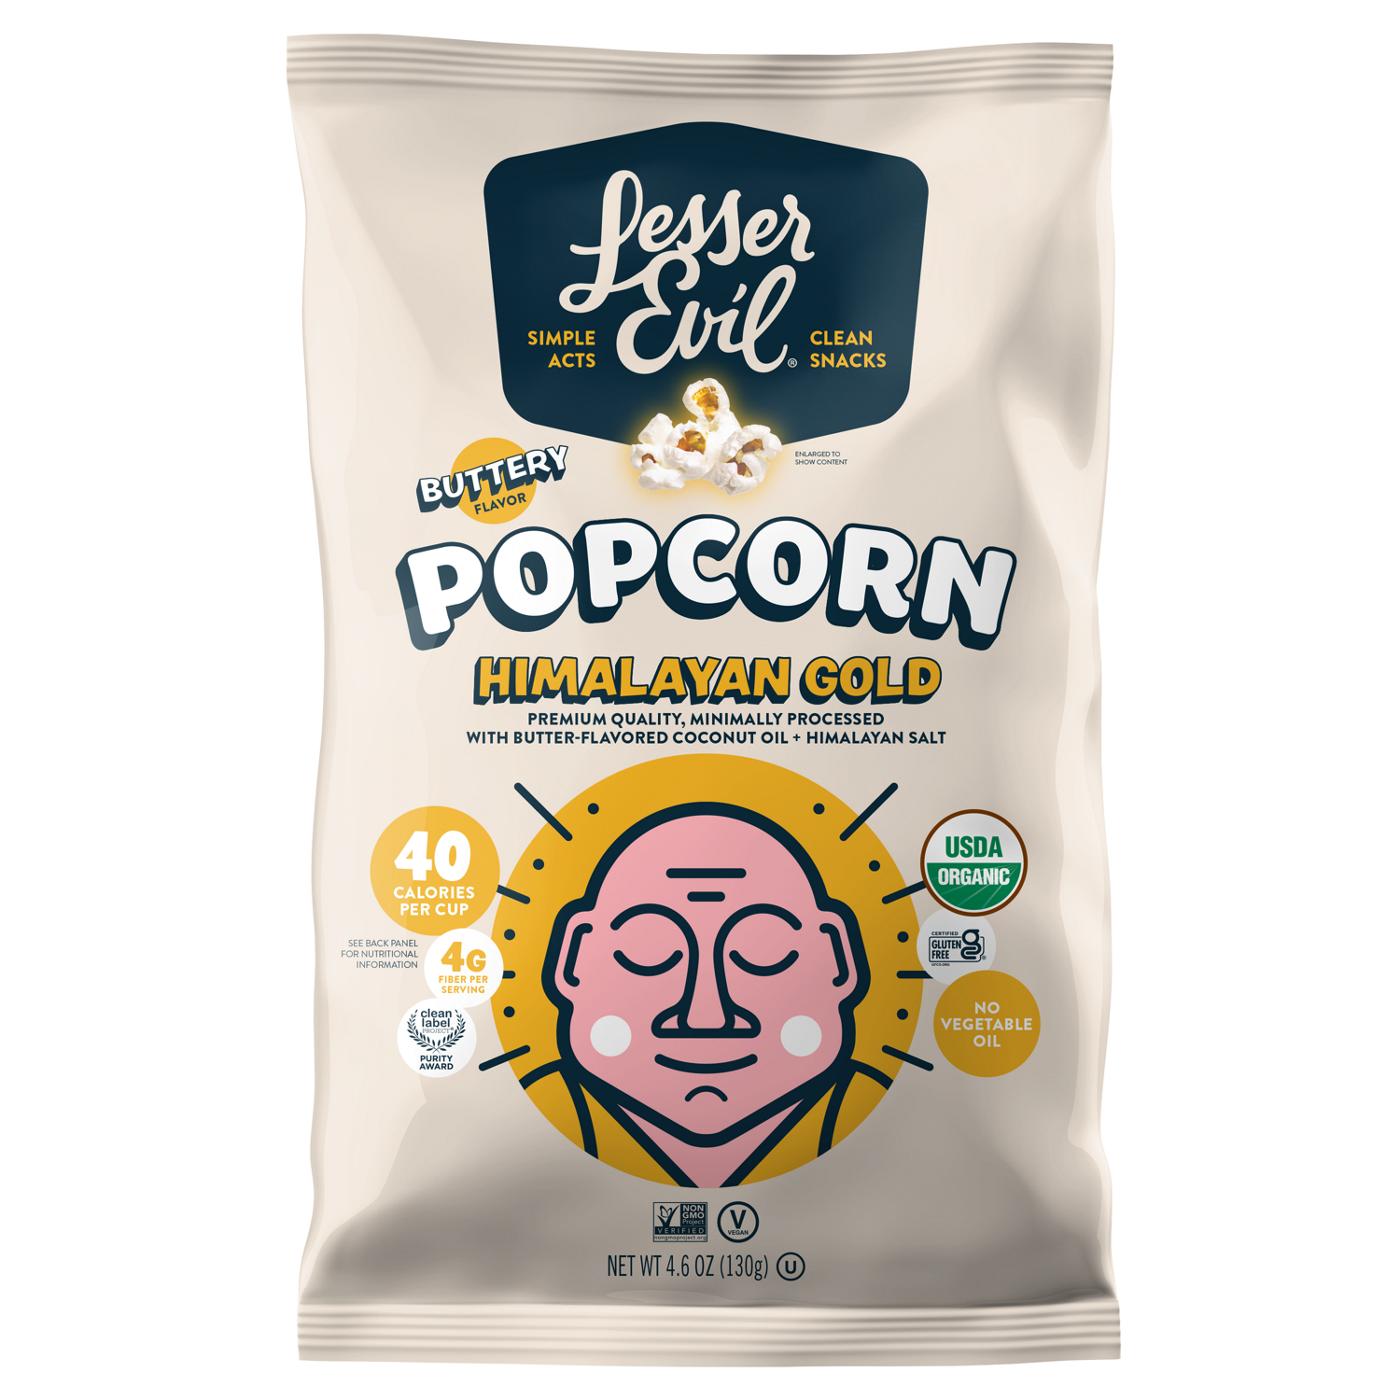 Lesser Evil Organic Popcorn Himalayan Gold; image 1 of 4